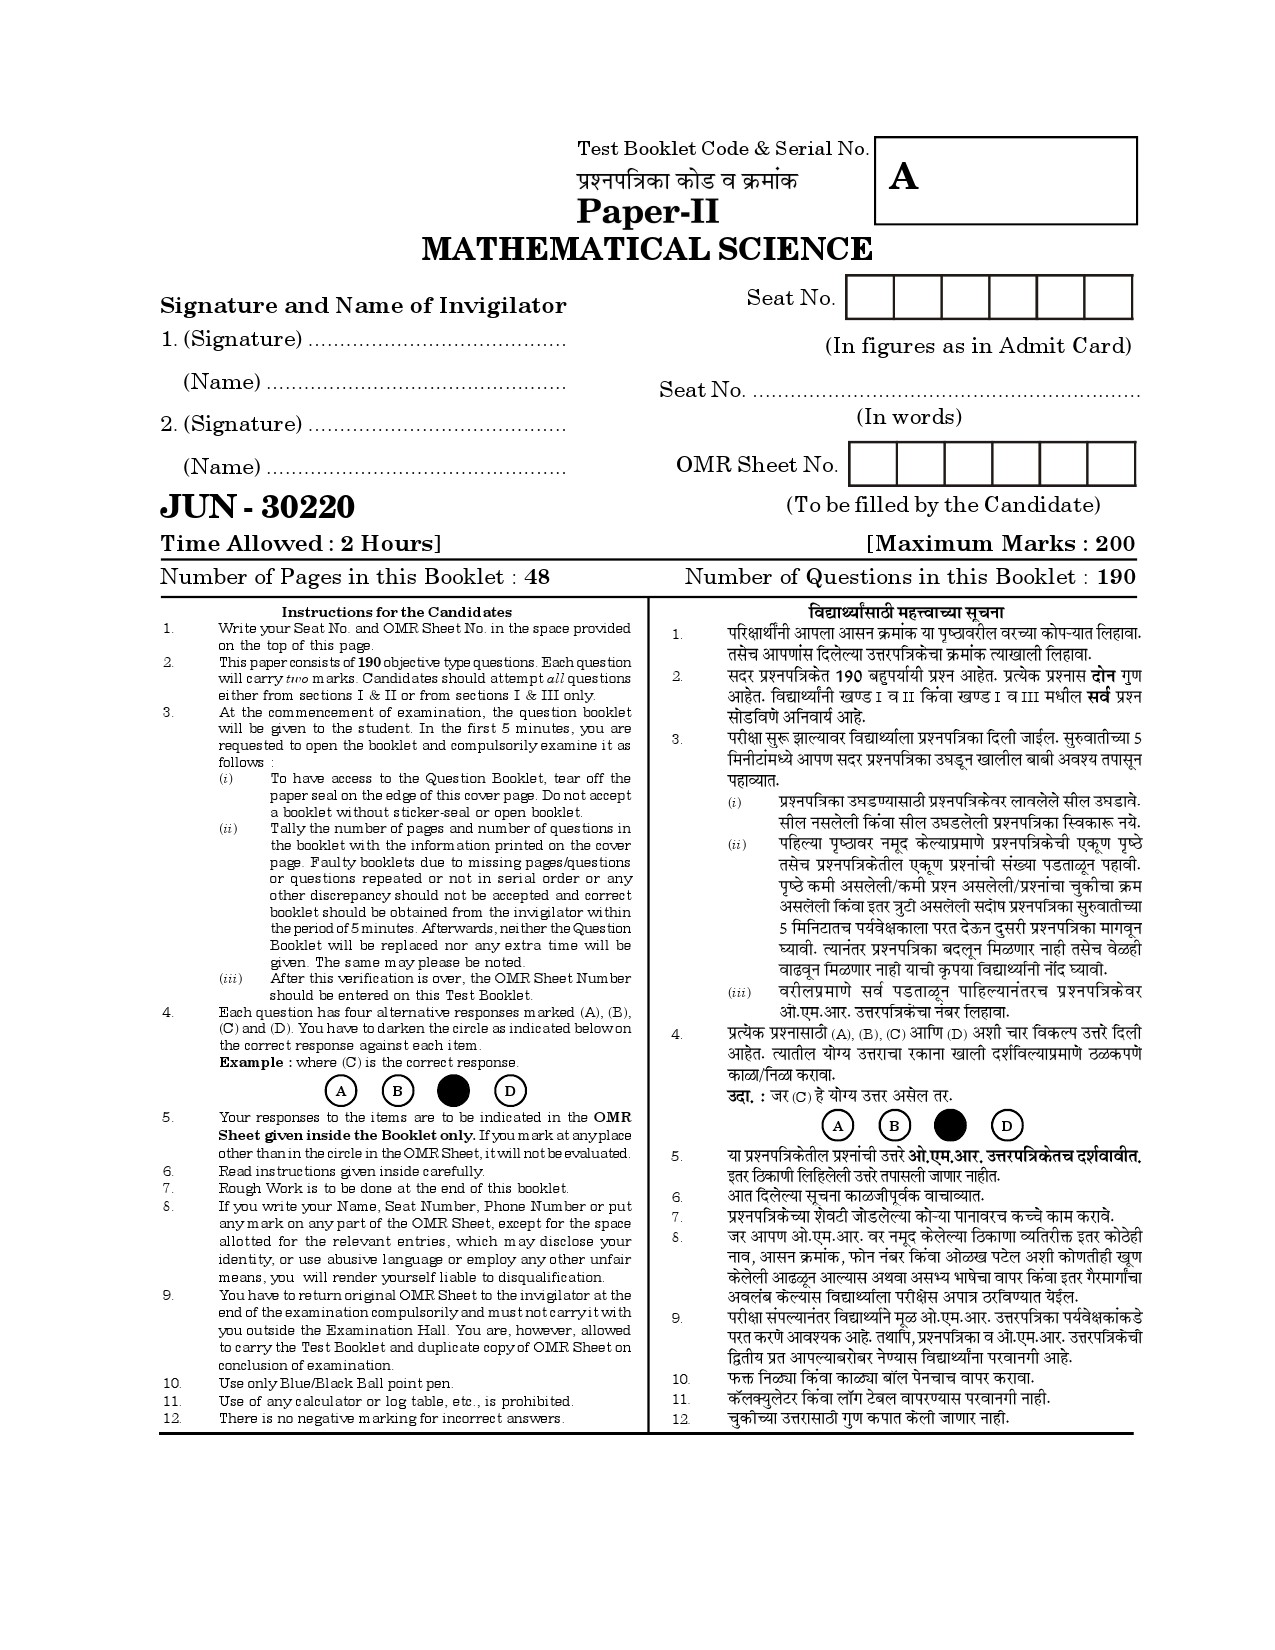 Maharashtra SET Mathematical Sciences Question Paper II June 2020 1